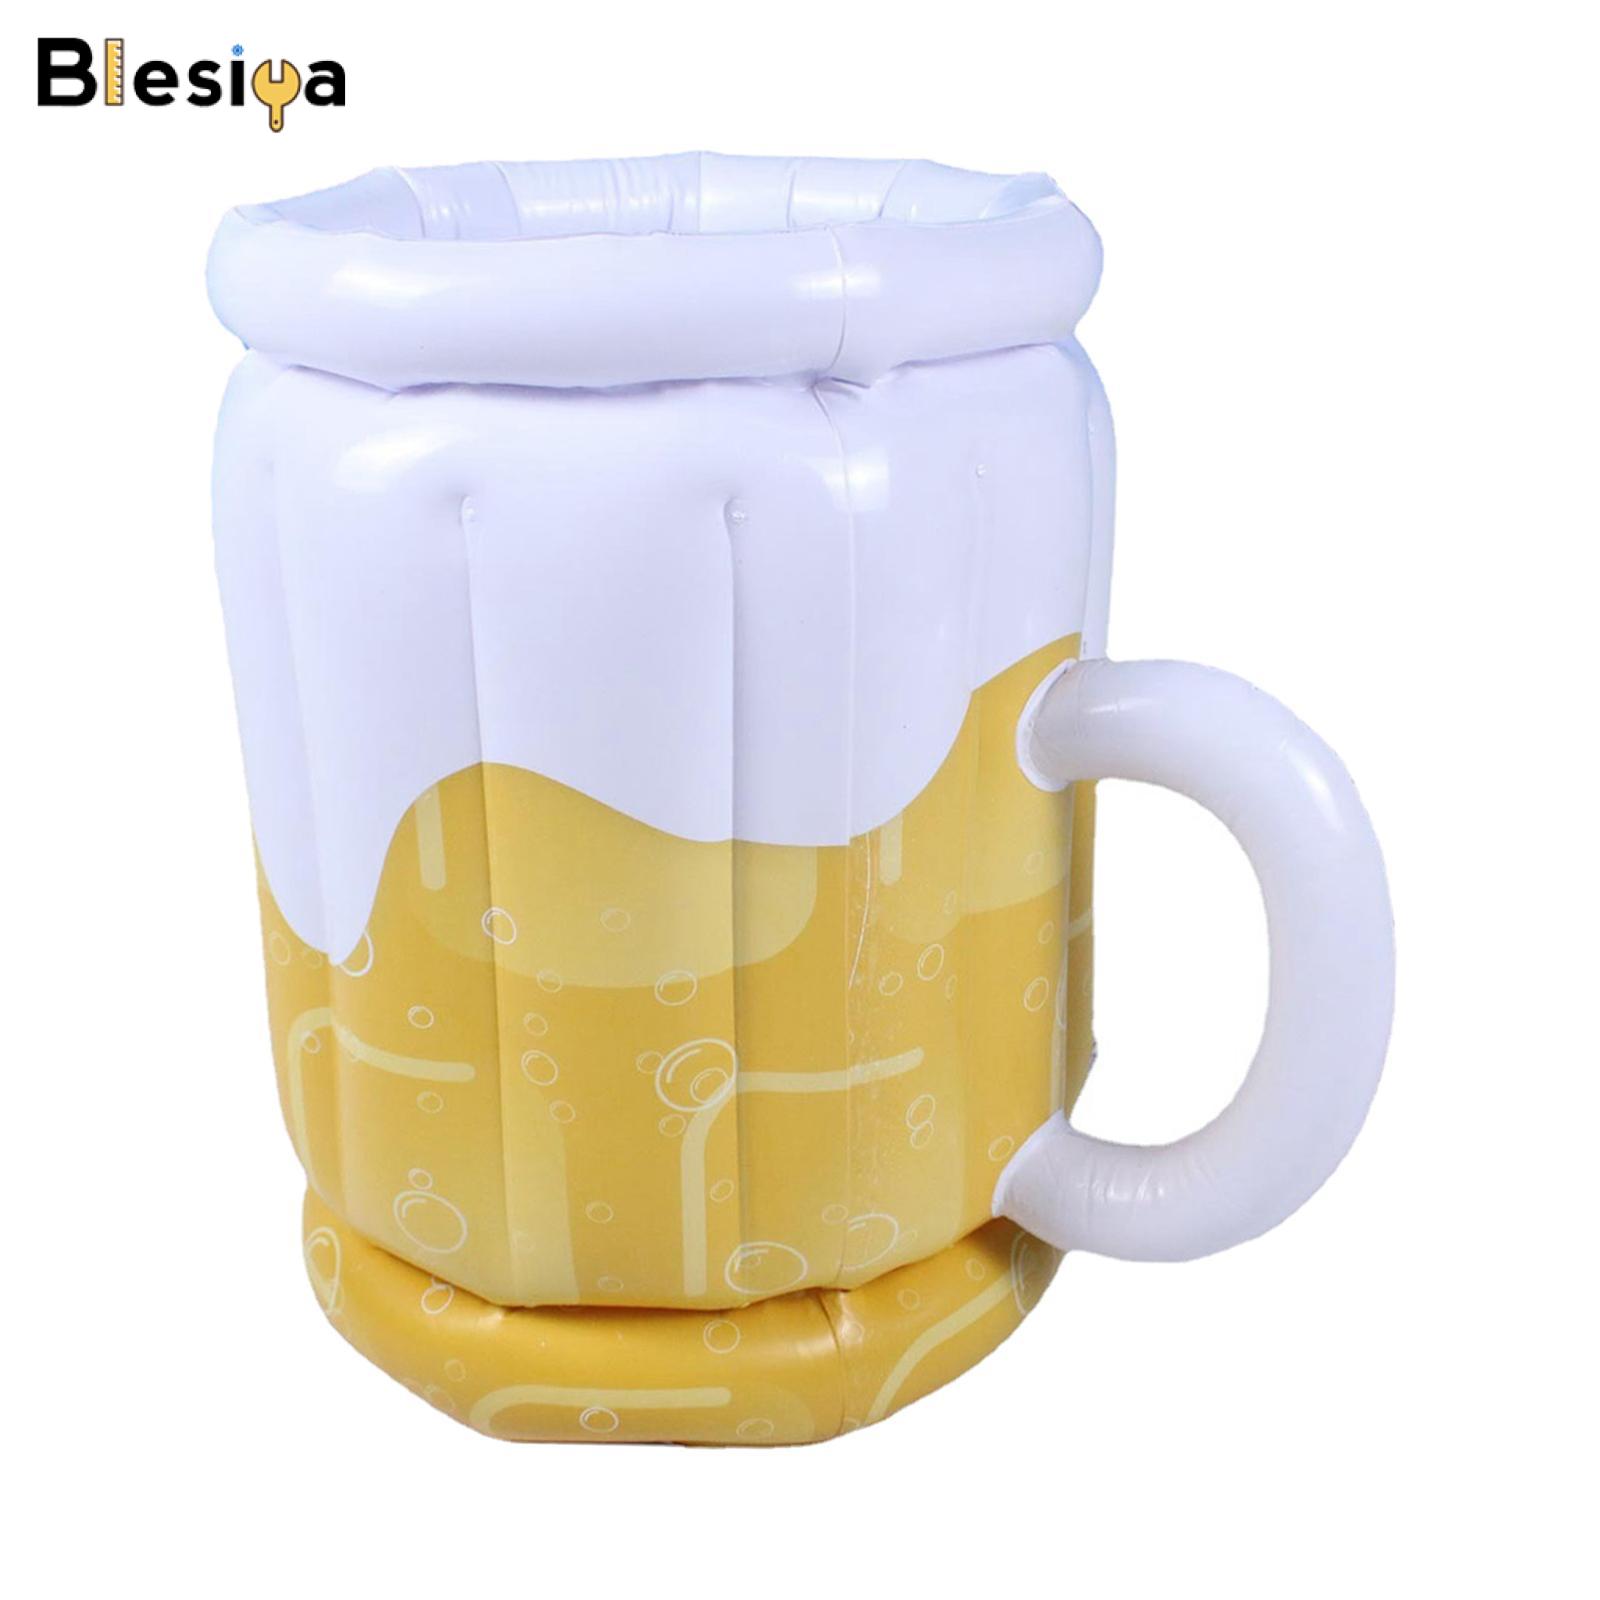 Blesiya Inflatable Beer Mug Cooler Beverage Holder for Hawaiian Party BBQ